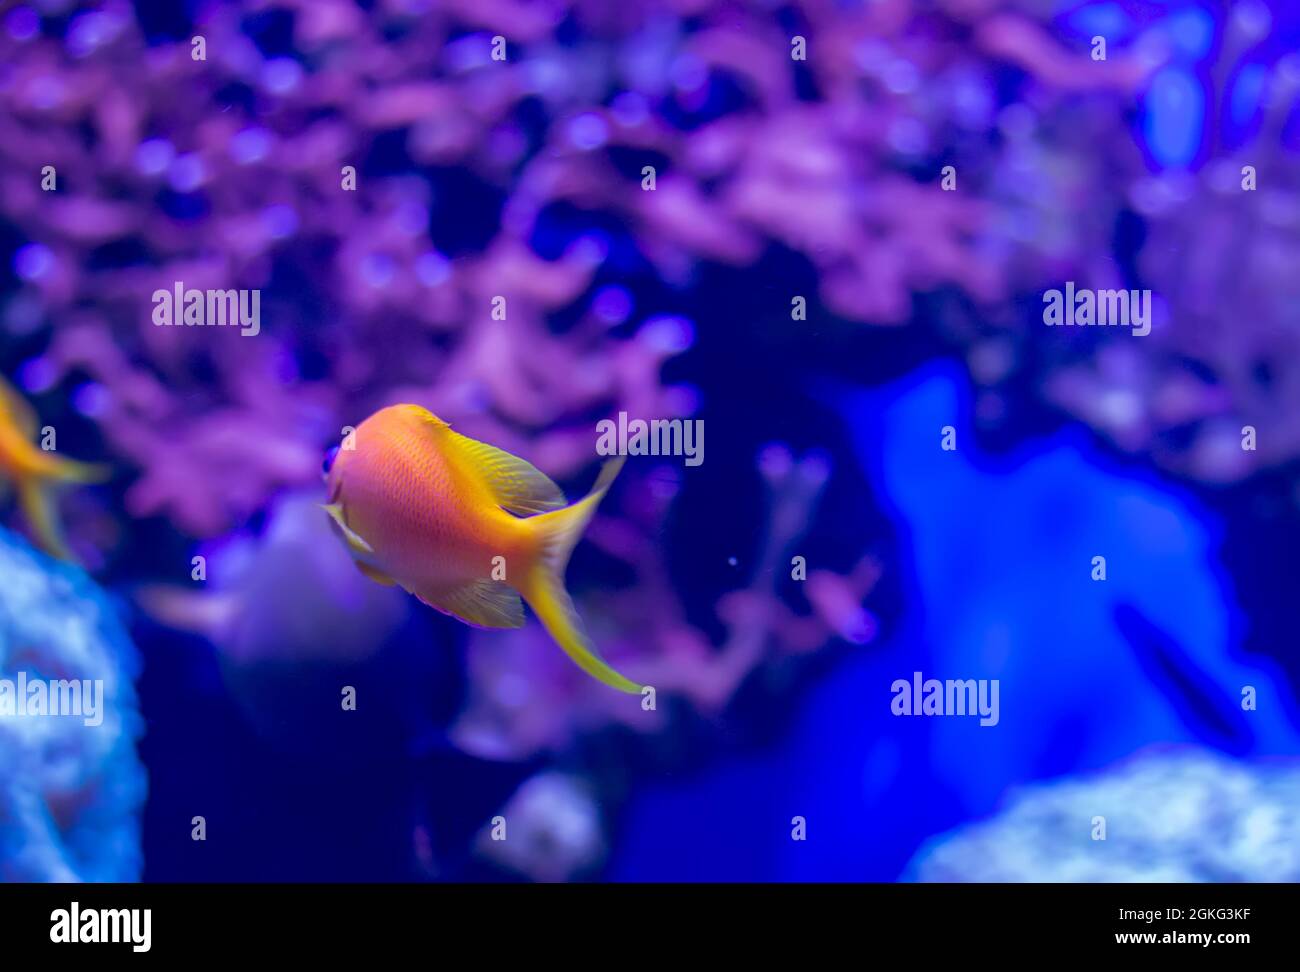 Common Goldfish (Carassius auratus) in aquarium shot from the back with purple background Stock Photo